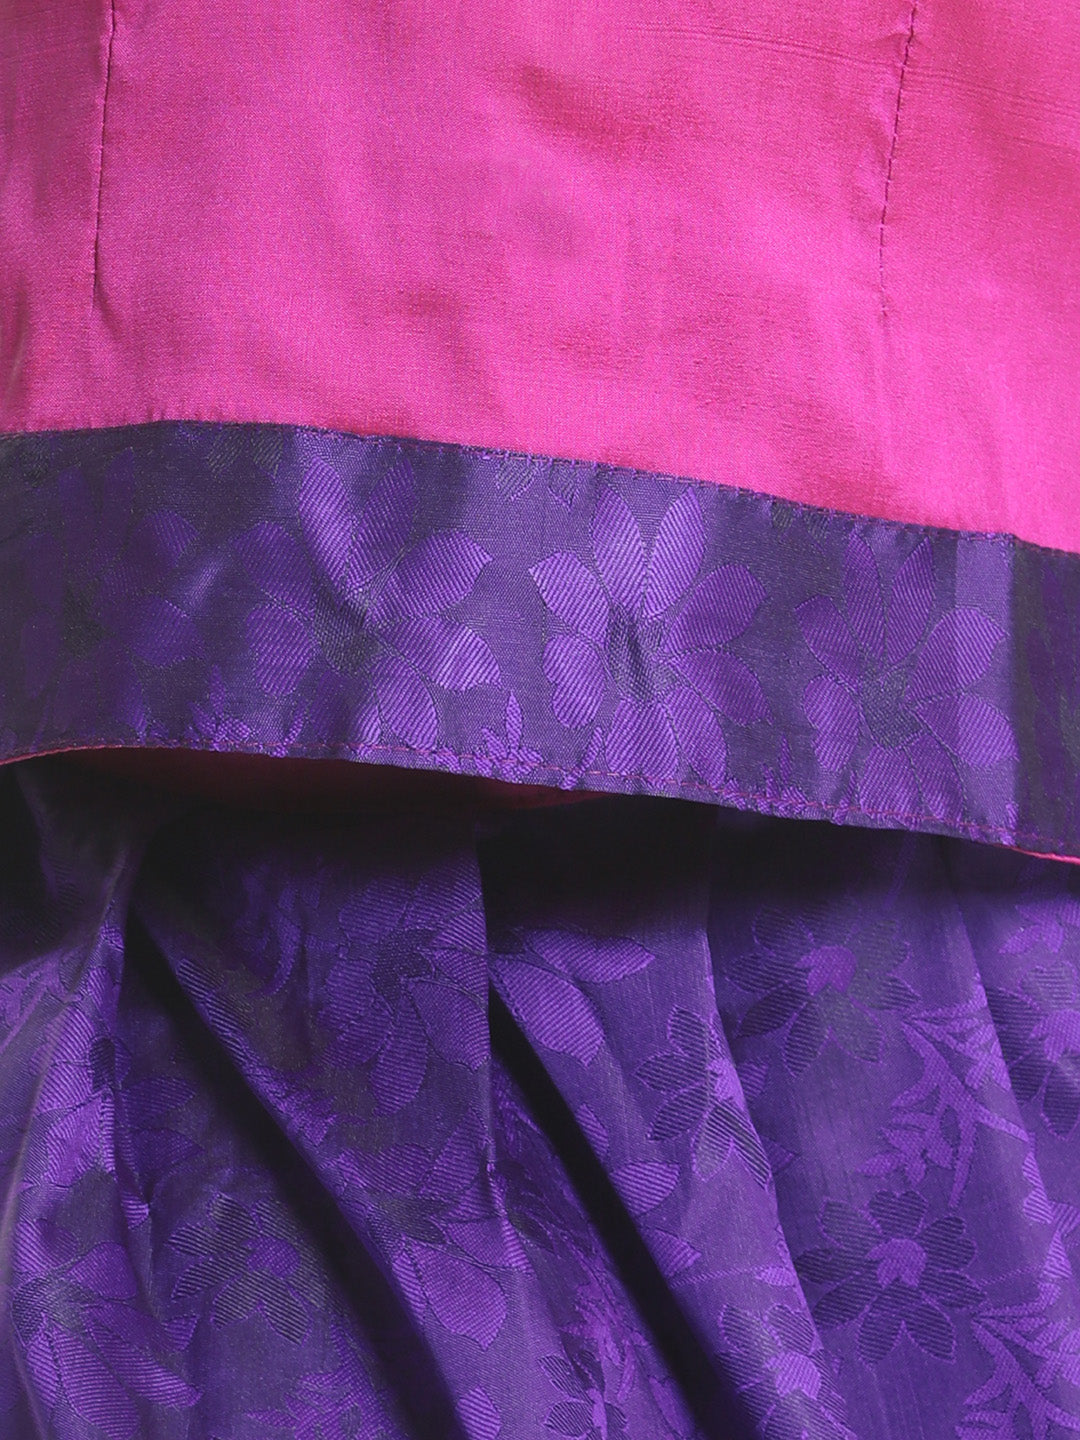 BownBee Half Sleeves South Indian Choli With Flower Print Pavda Pattu Lehenga- Pink